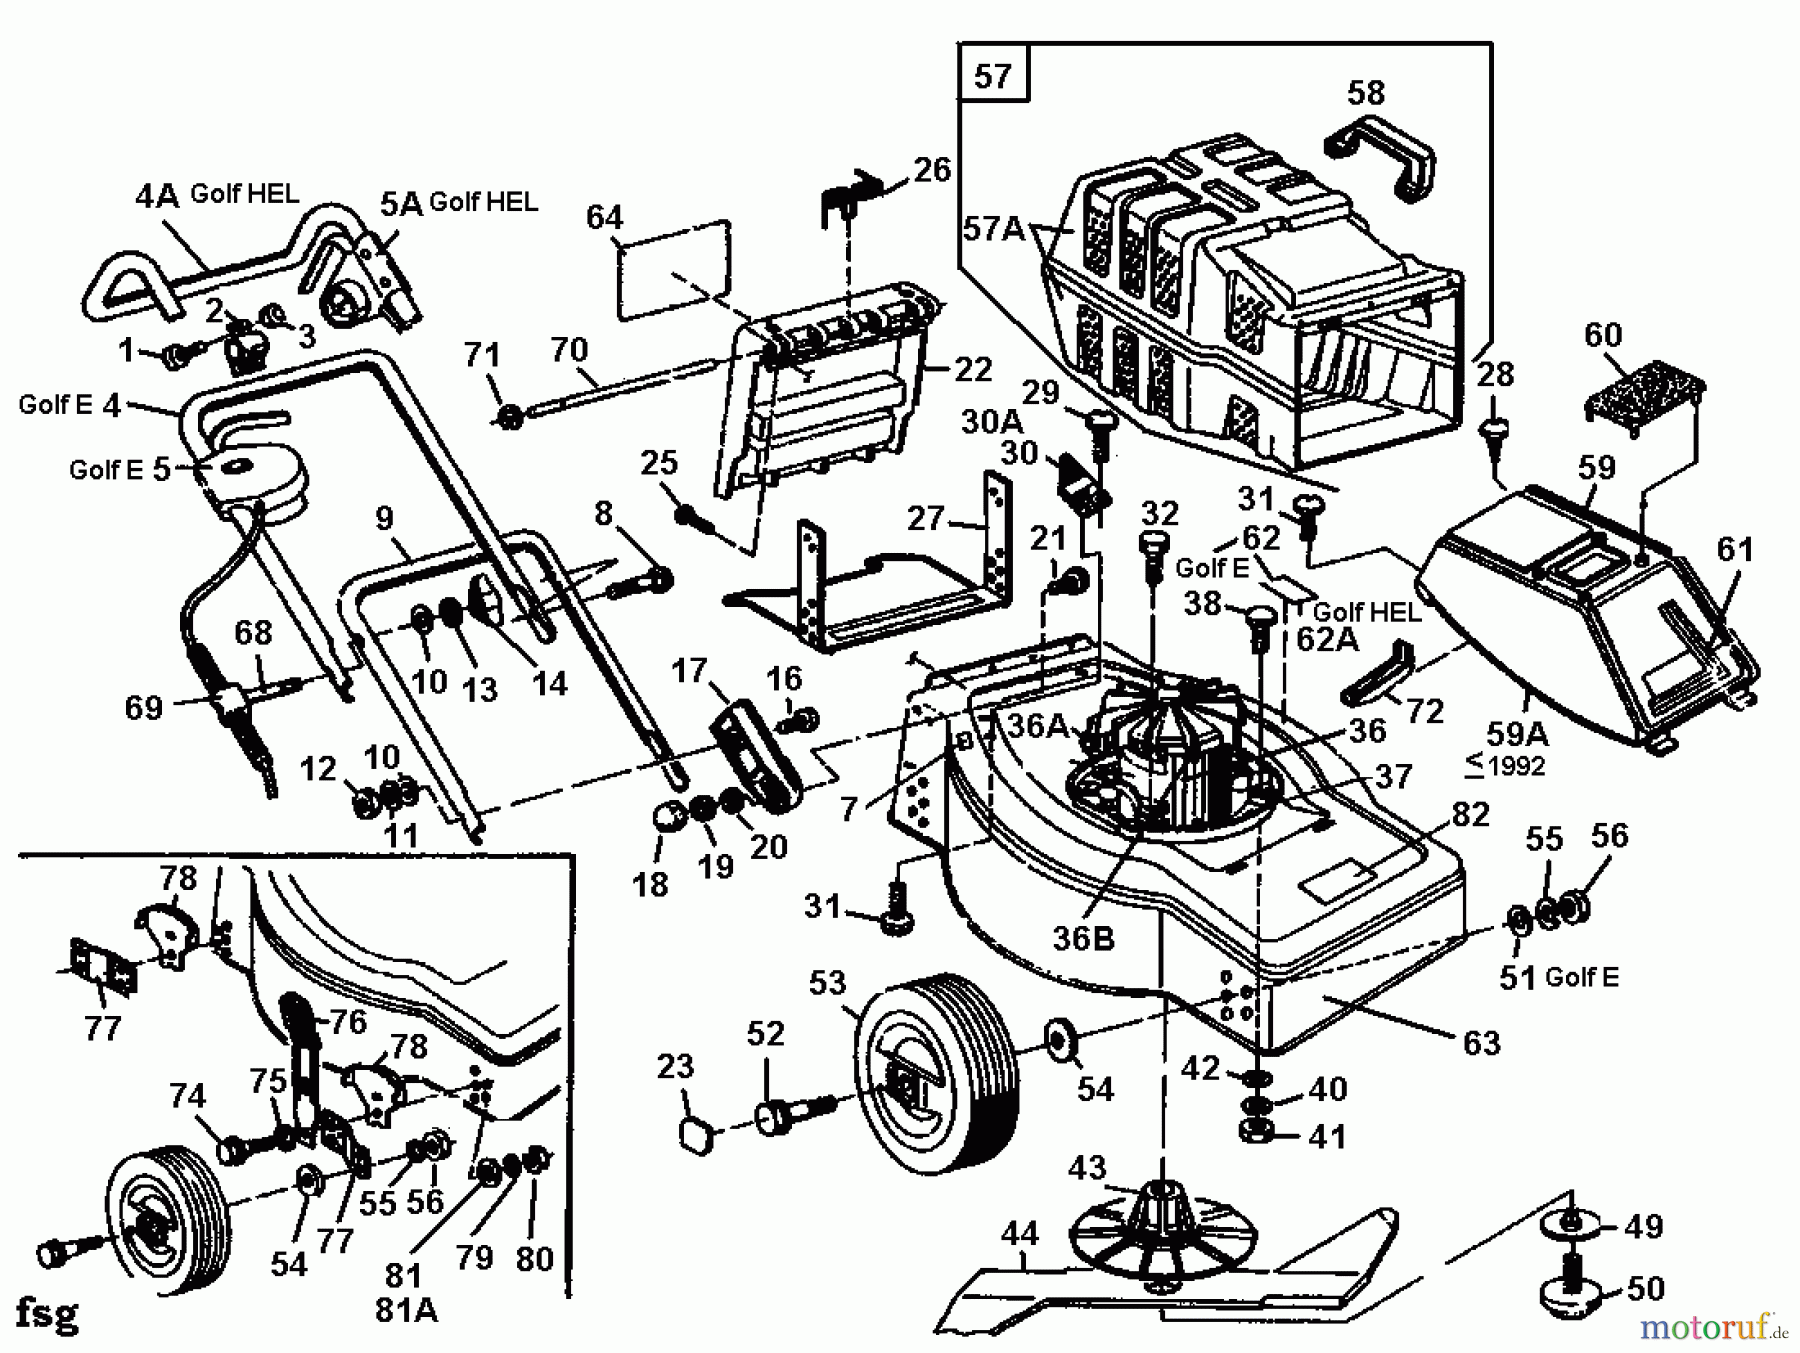  Golf Electric mower Golf HEL 02881.07  (1992) Basic machine